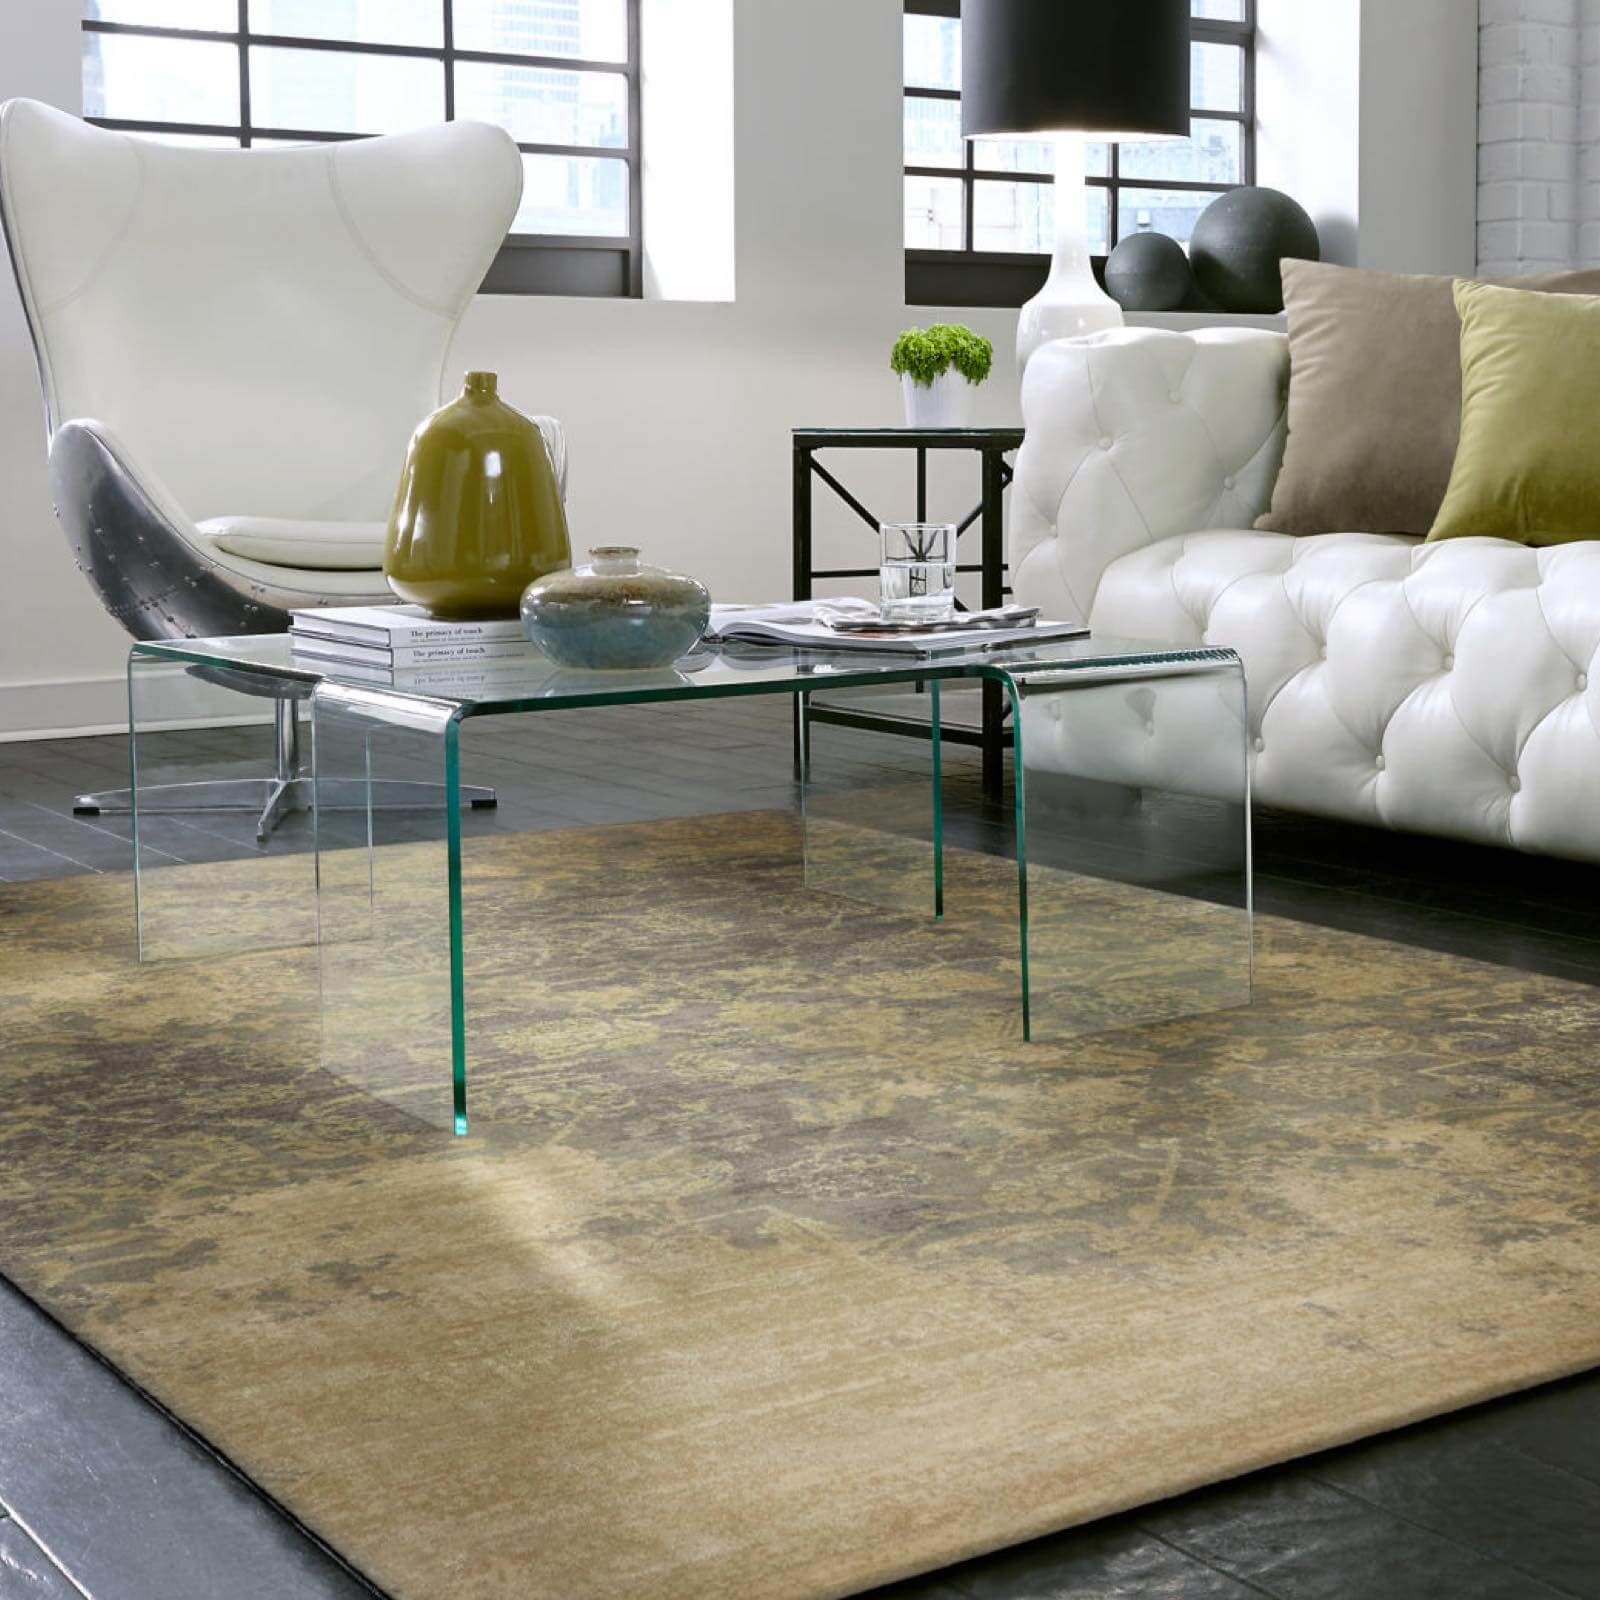 Area Rug in Living Room | Haley's Flooring & Interiors